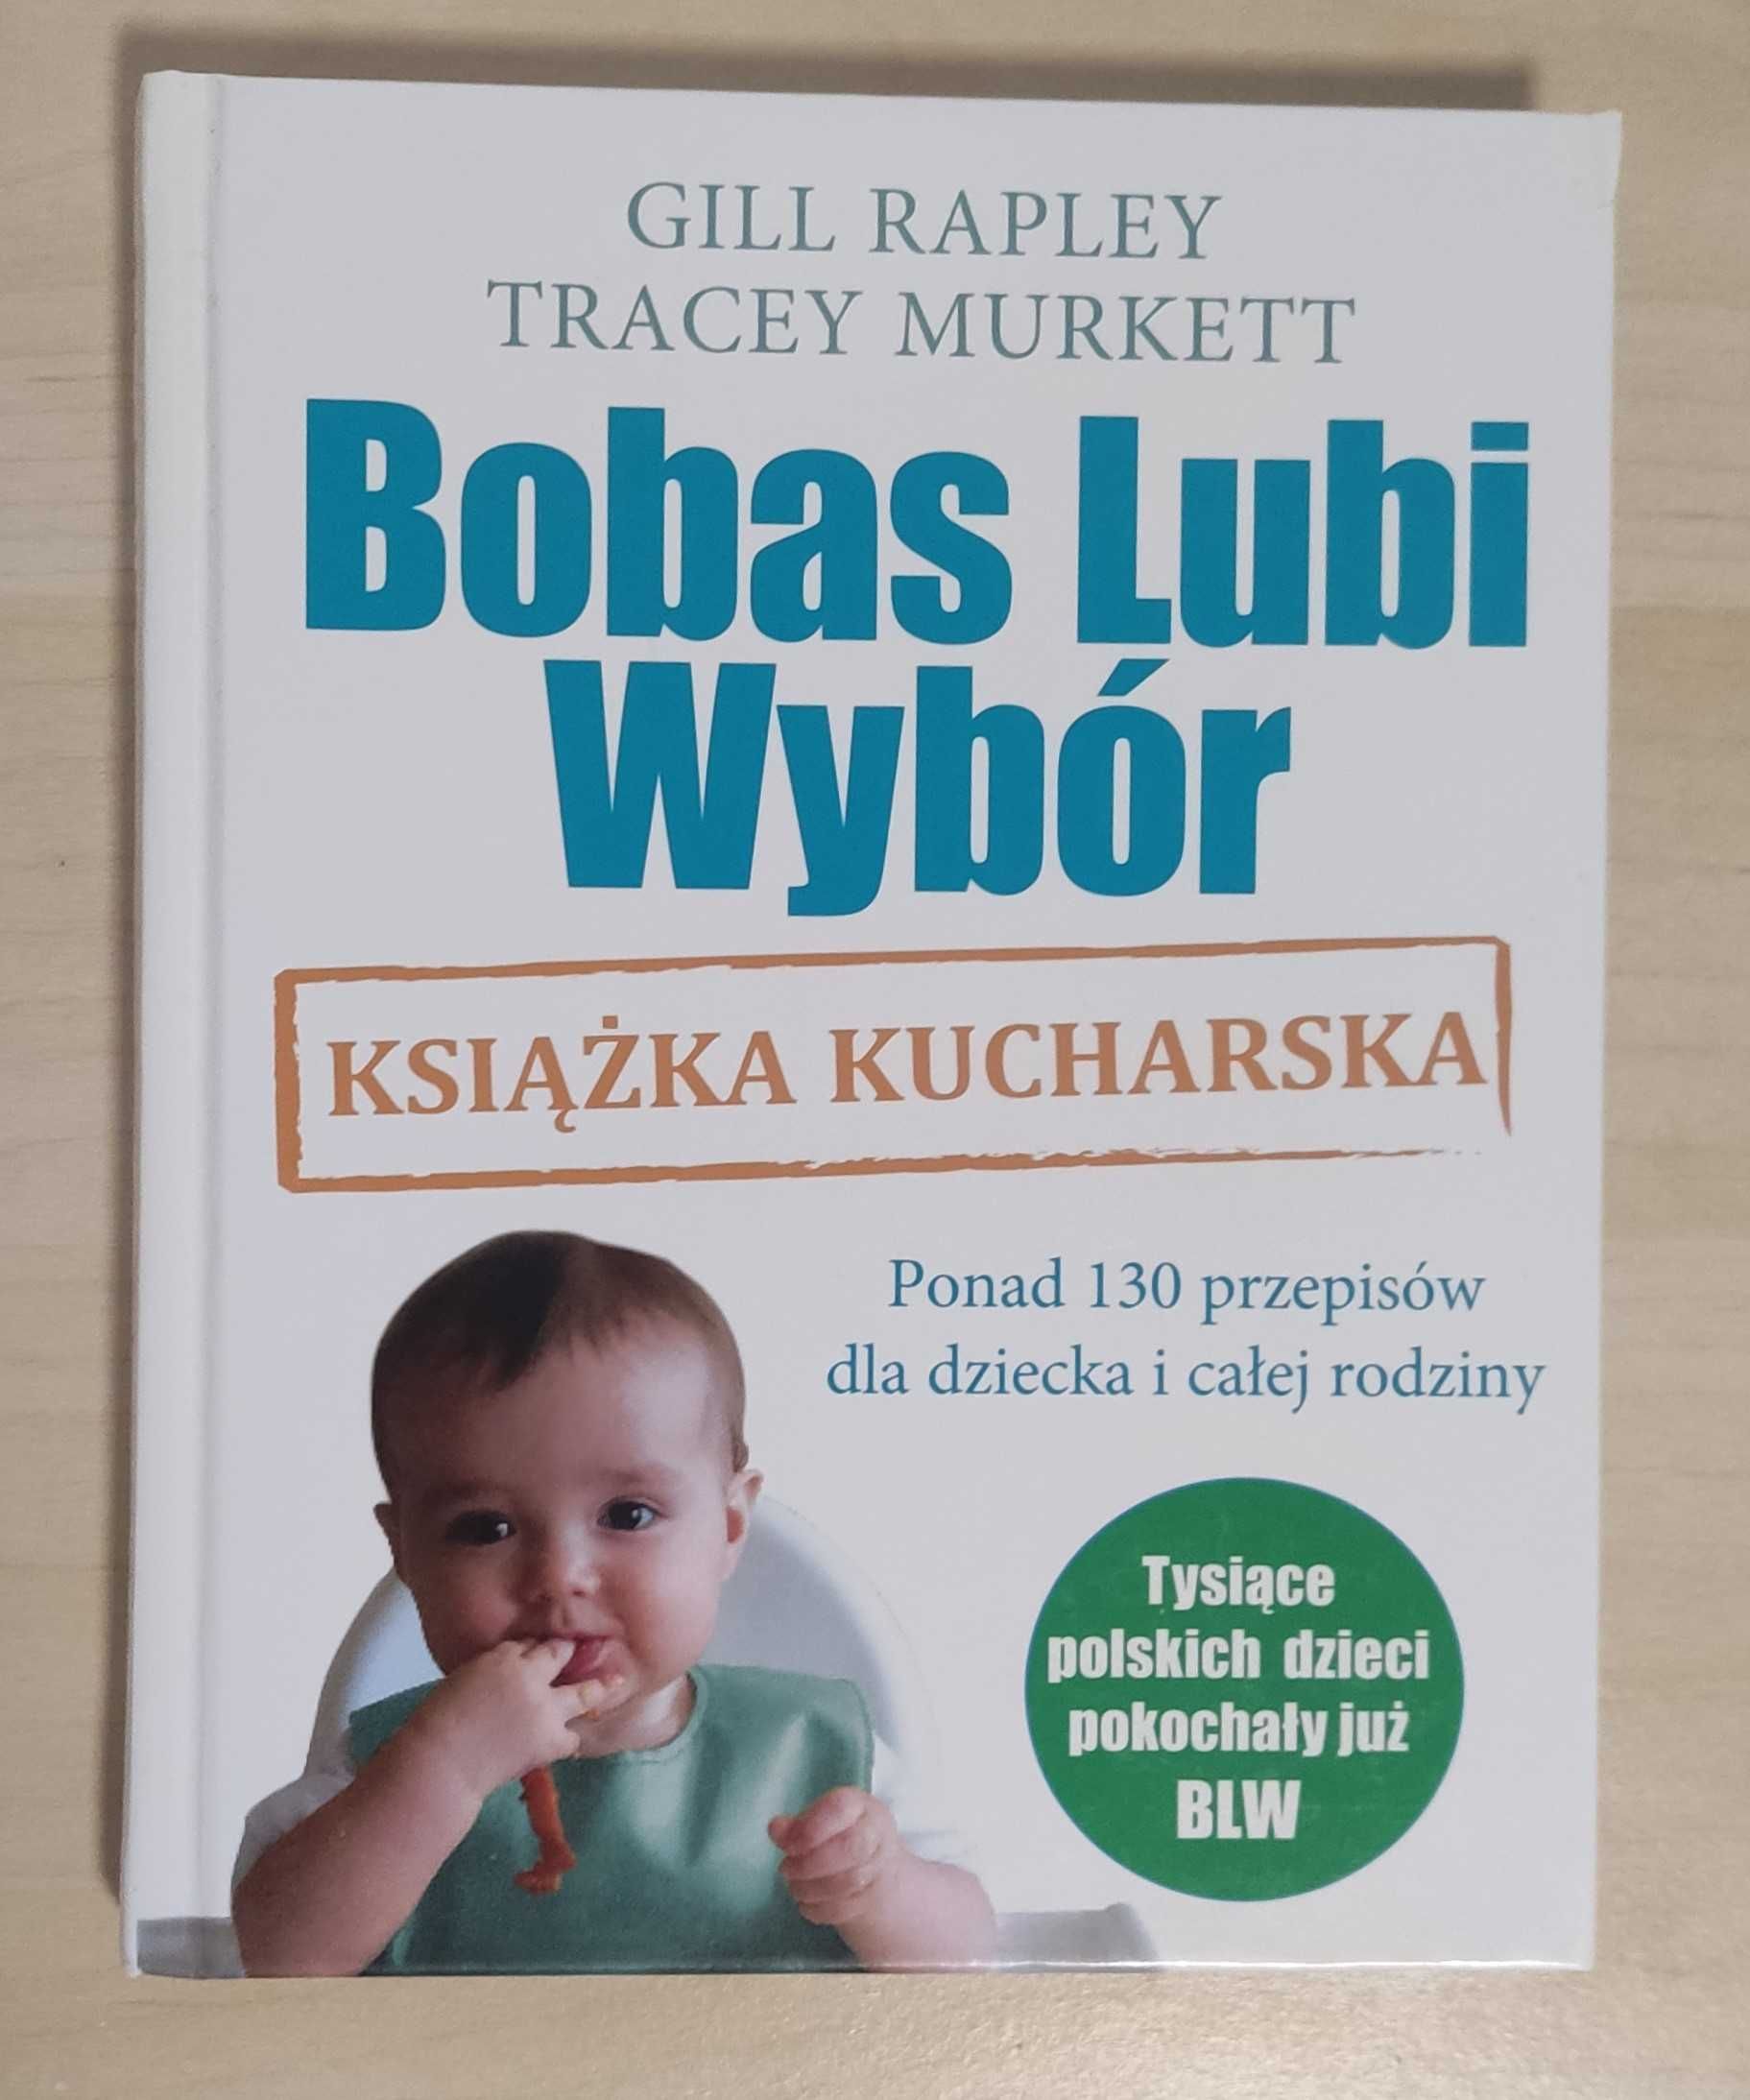 Bobas Lubi wybór Książka kucharska Rapley Murkett